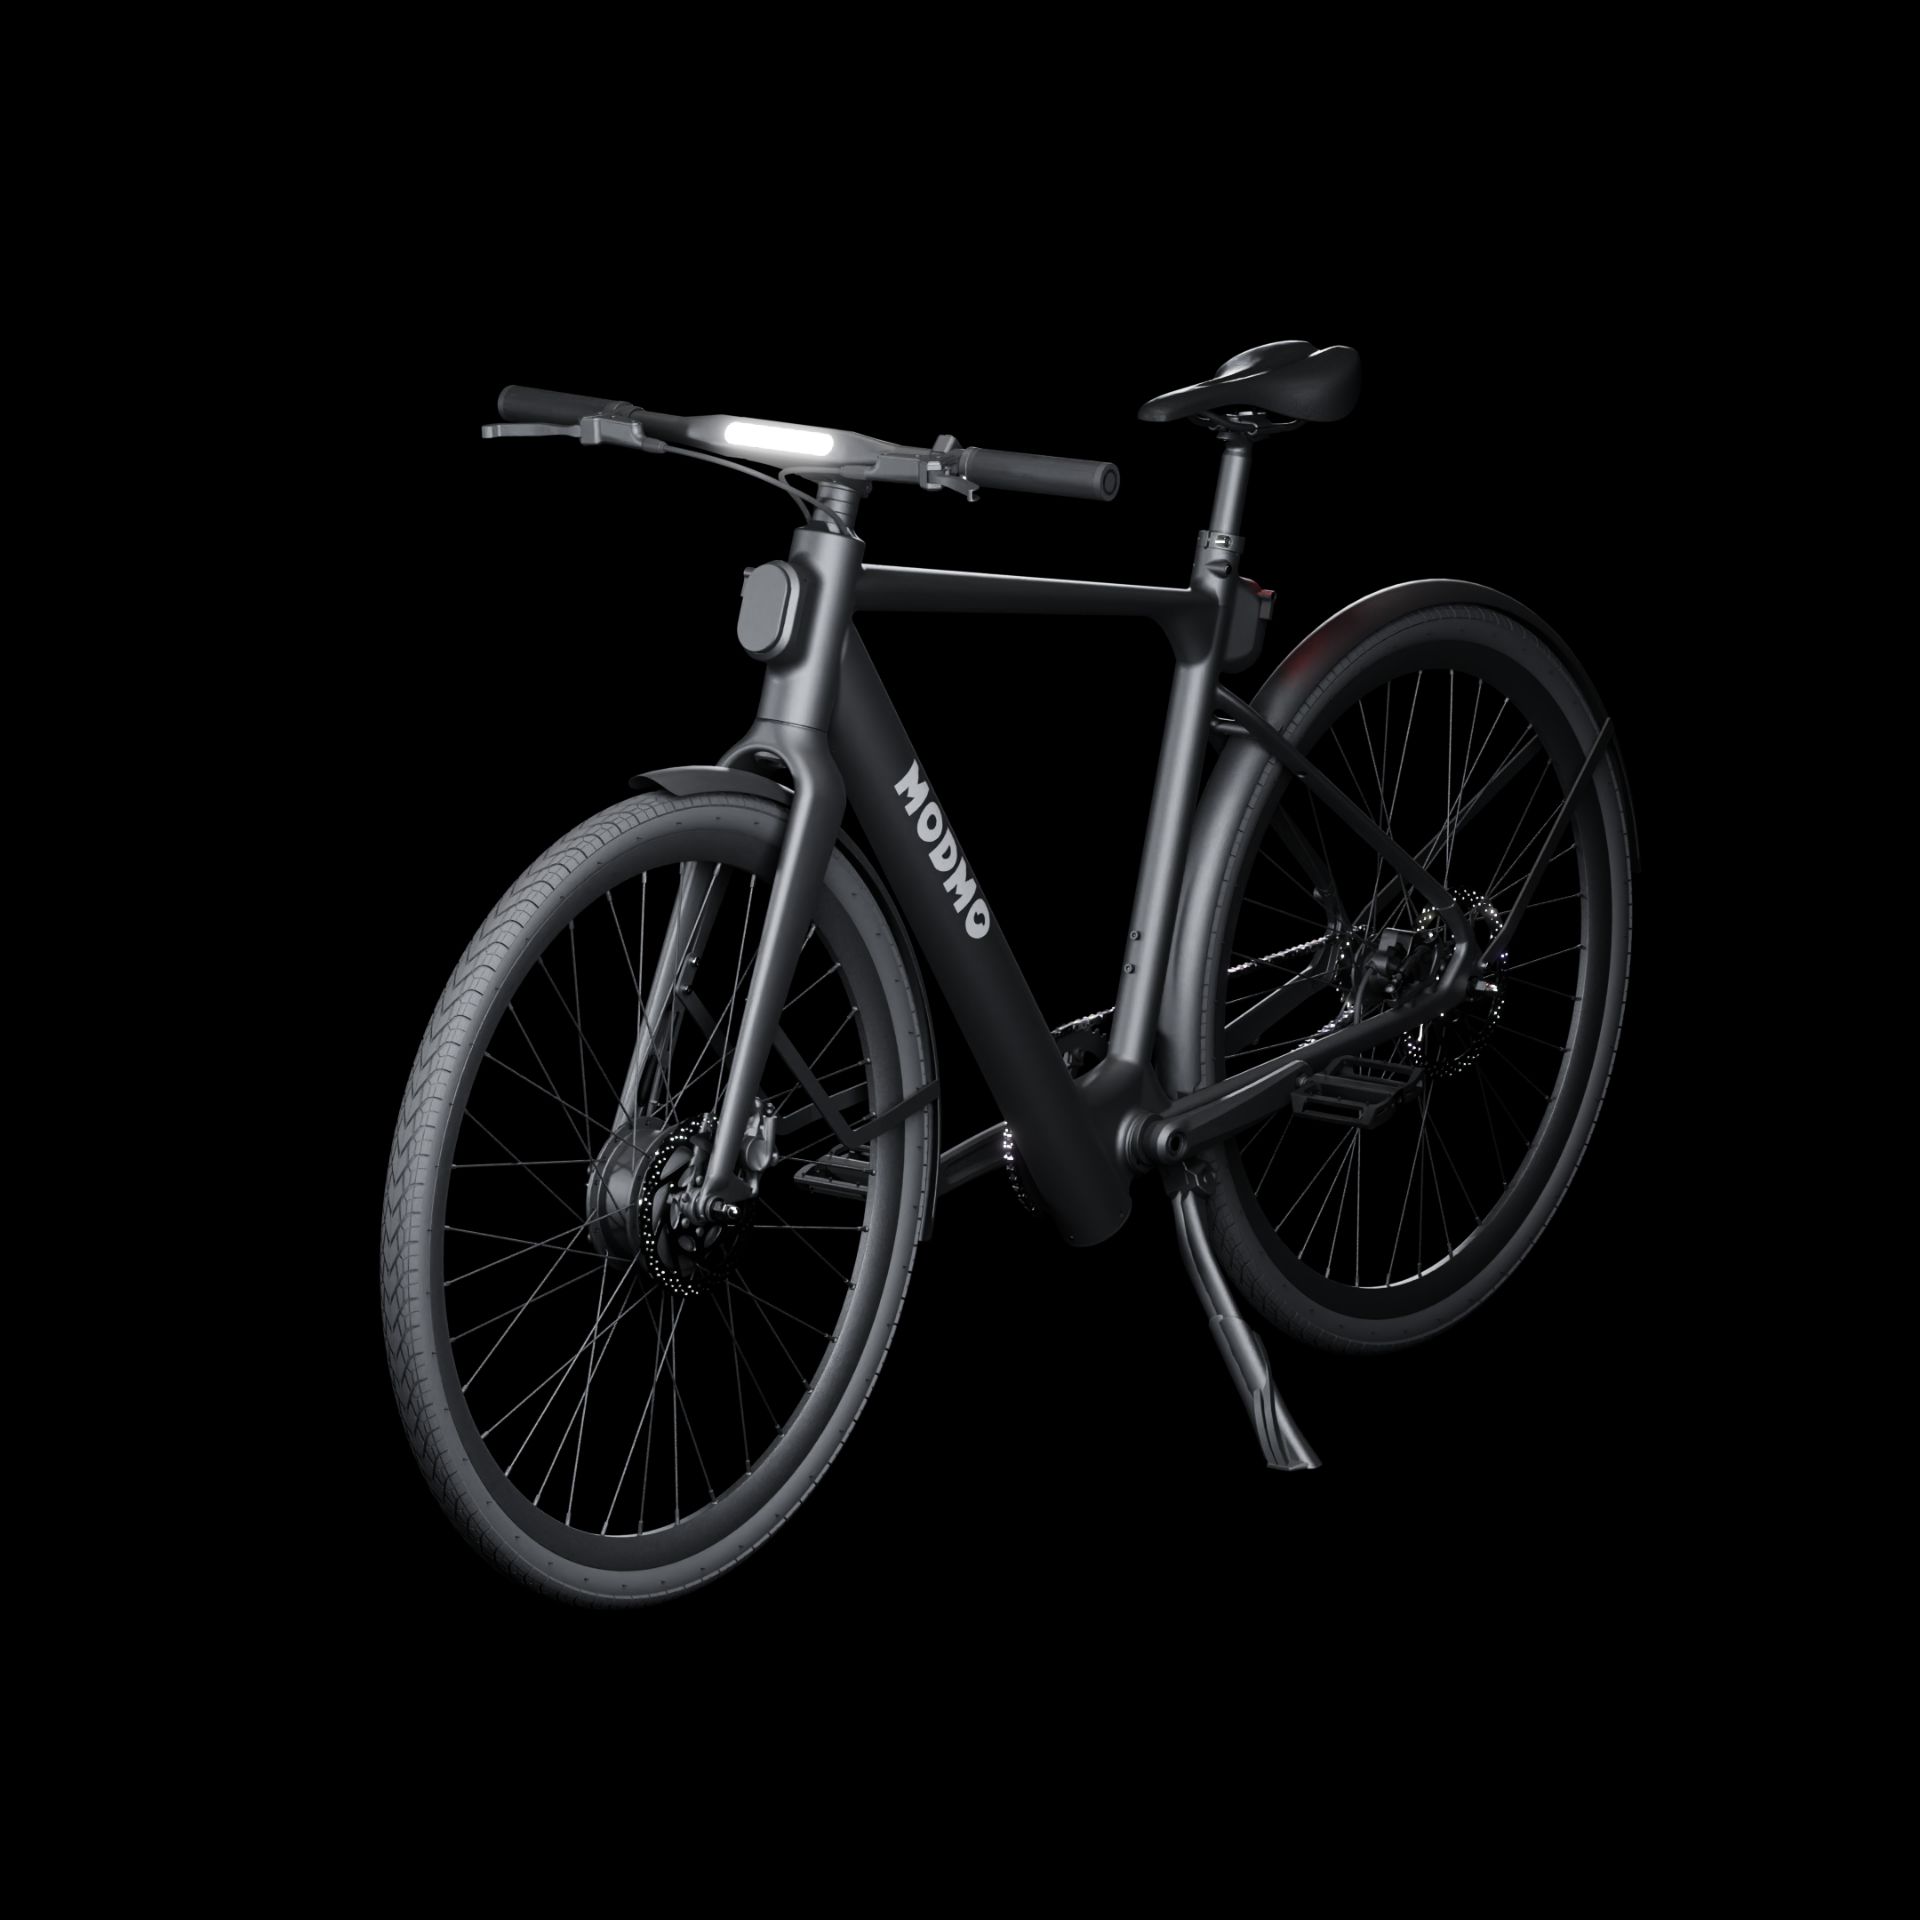 Modmo Saigon+ Electric Bicycle - RRP £2800 - Size L (Rider 175-190cm) - Image 3 of 15